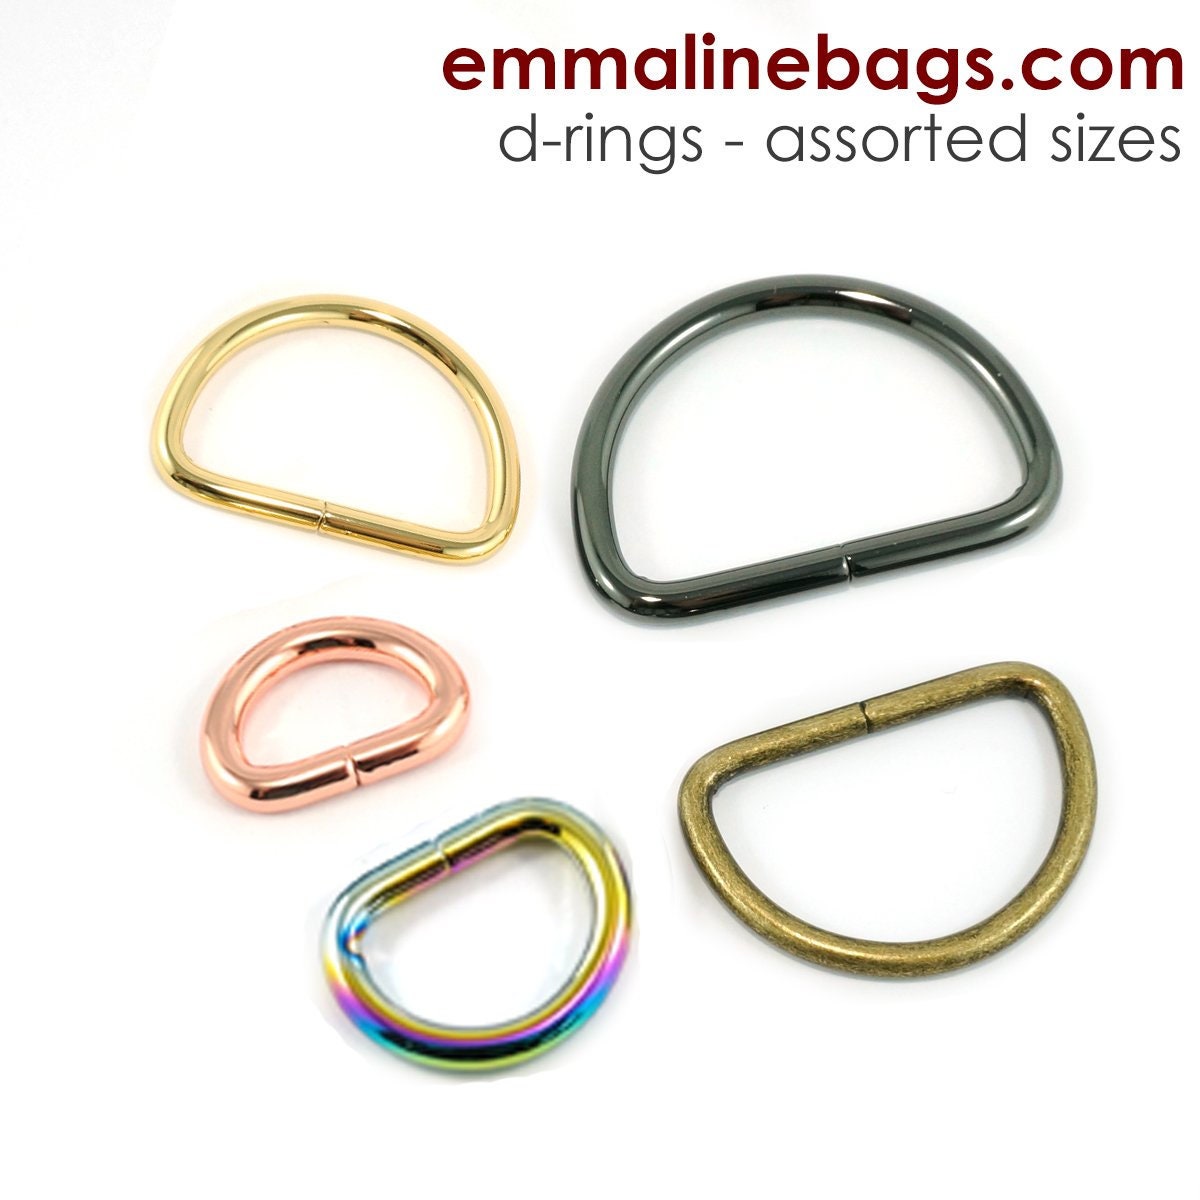 3/4" D-rings 4 Pack